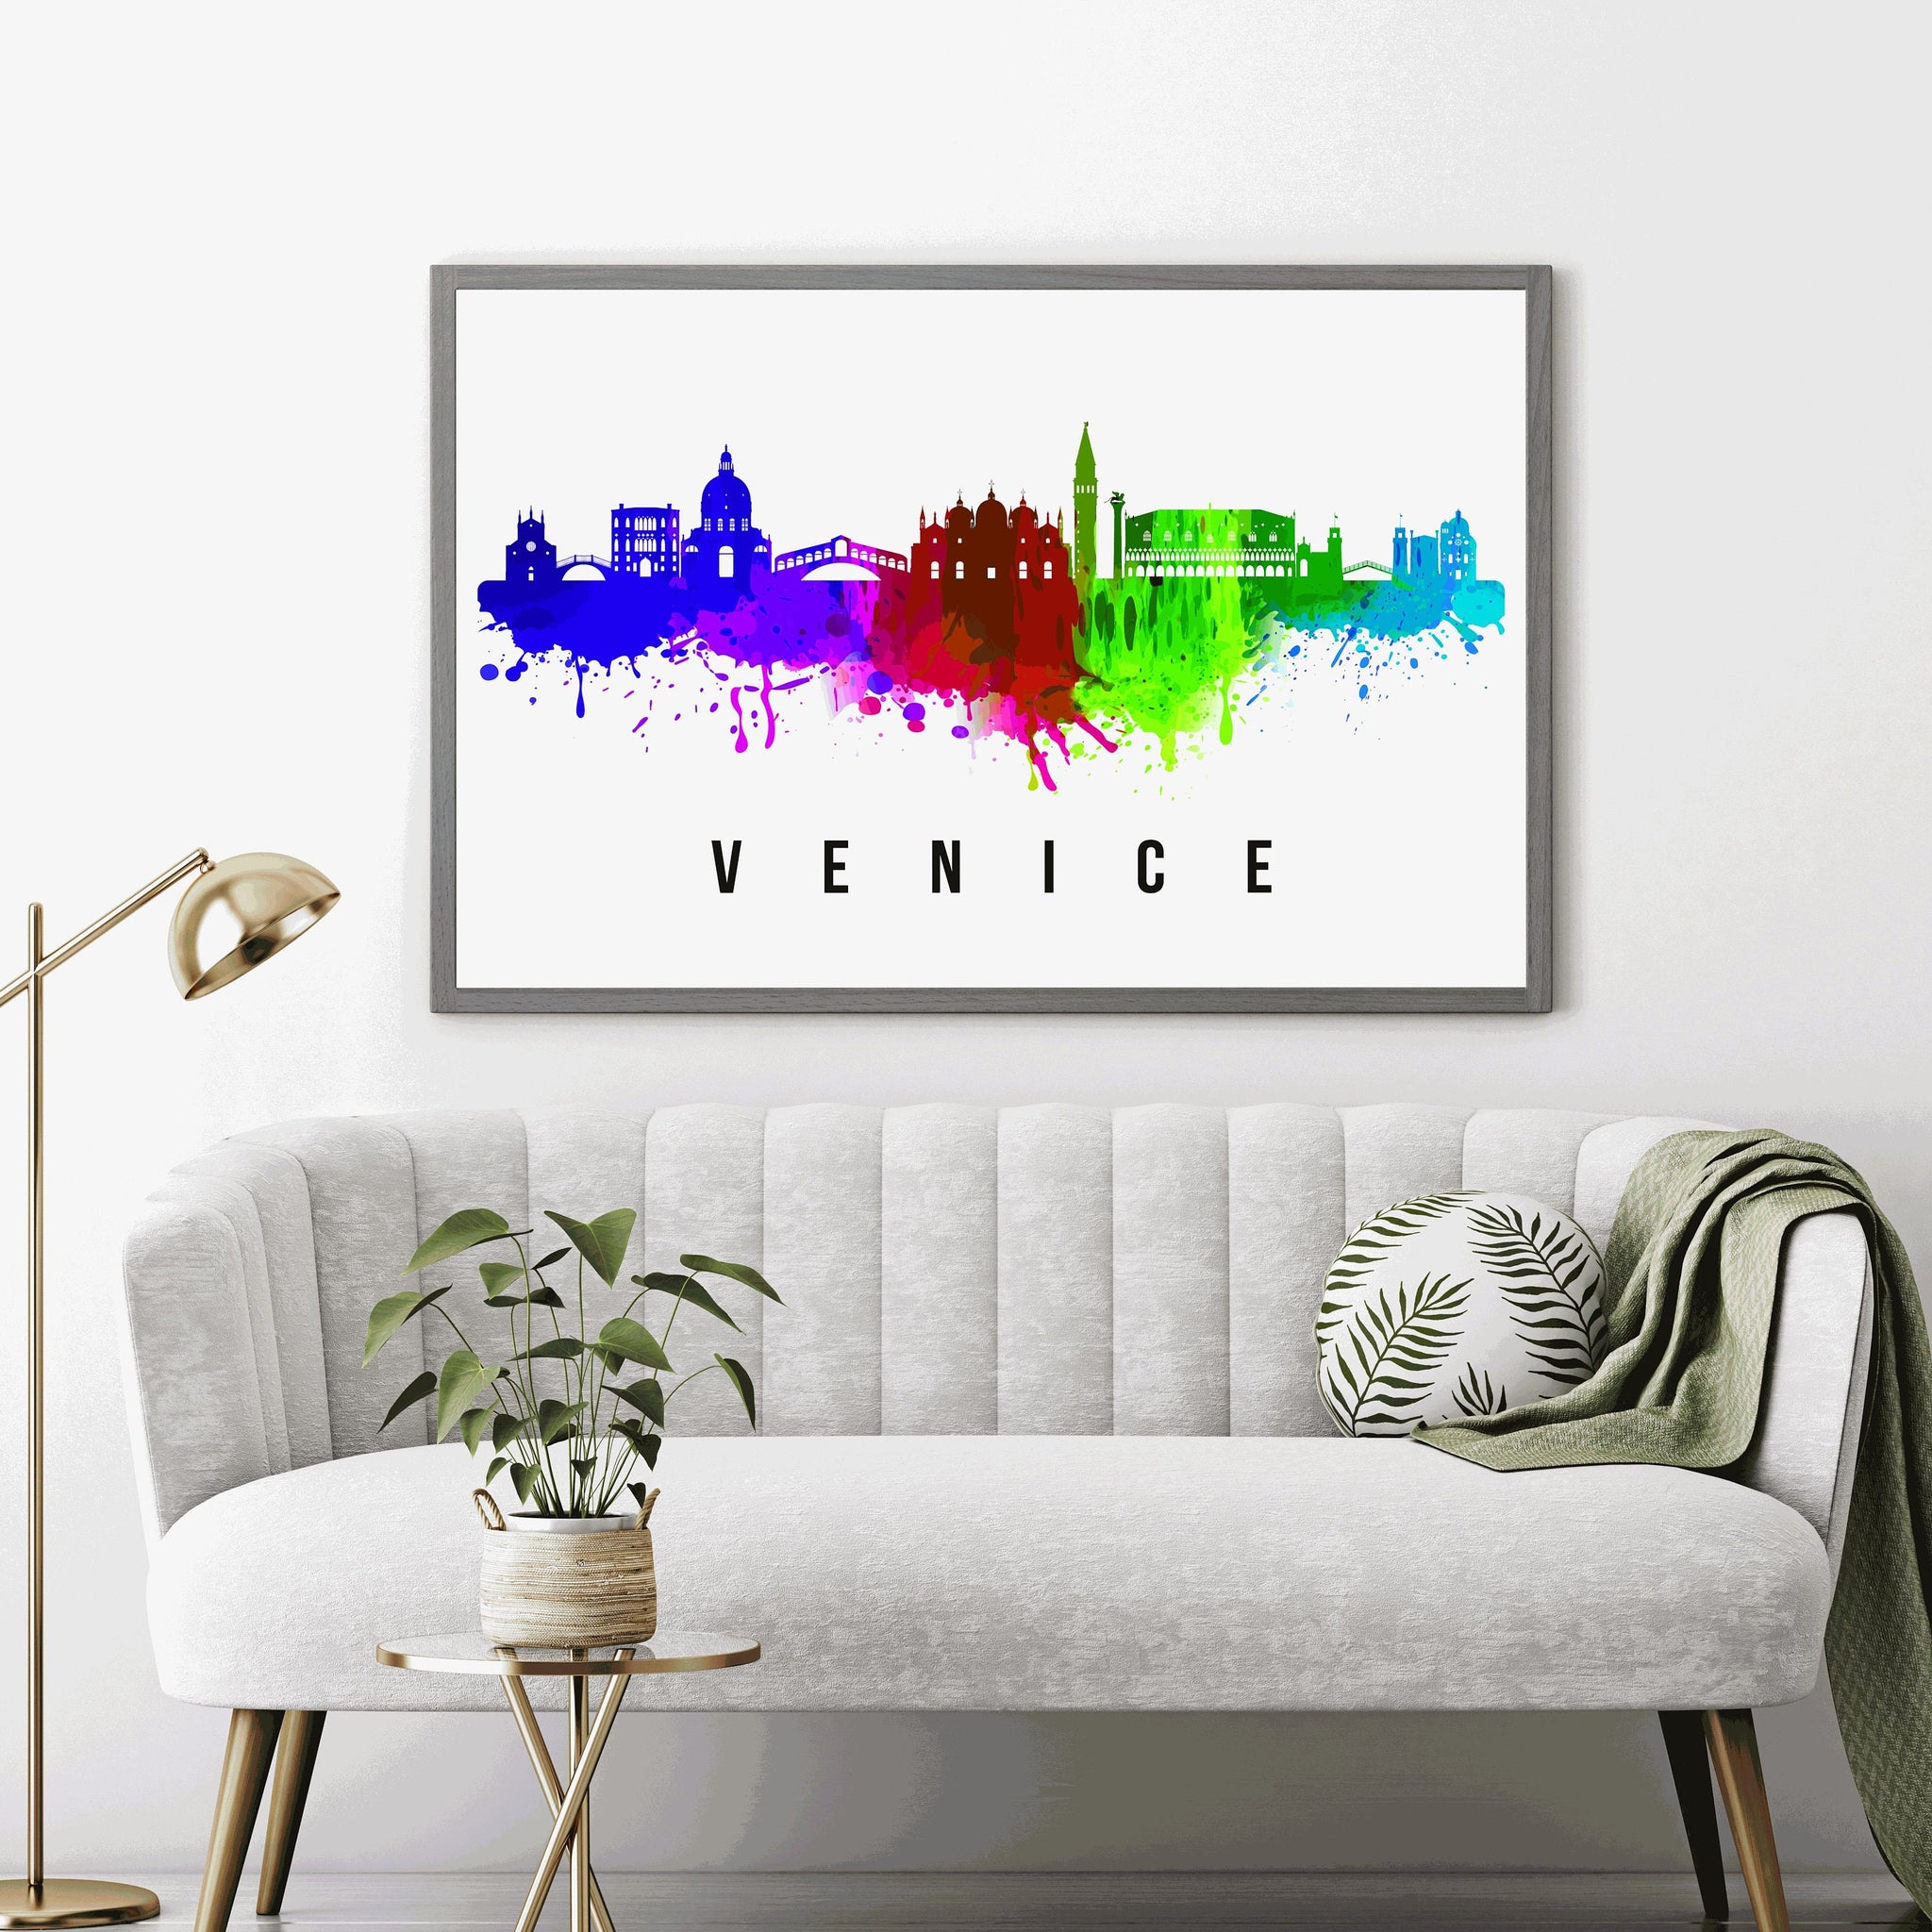 VENICE - ITALY Poster, Skyline Poster Cityscape and Landmark Venice City Illustration Home Wall Art, Office Decor